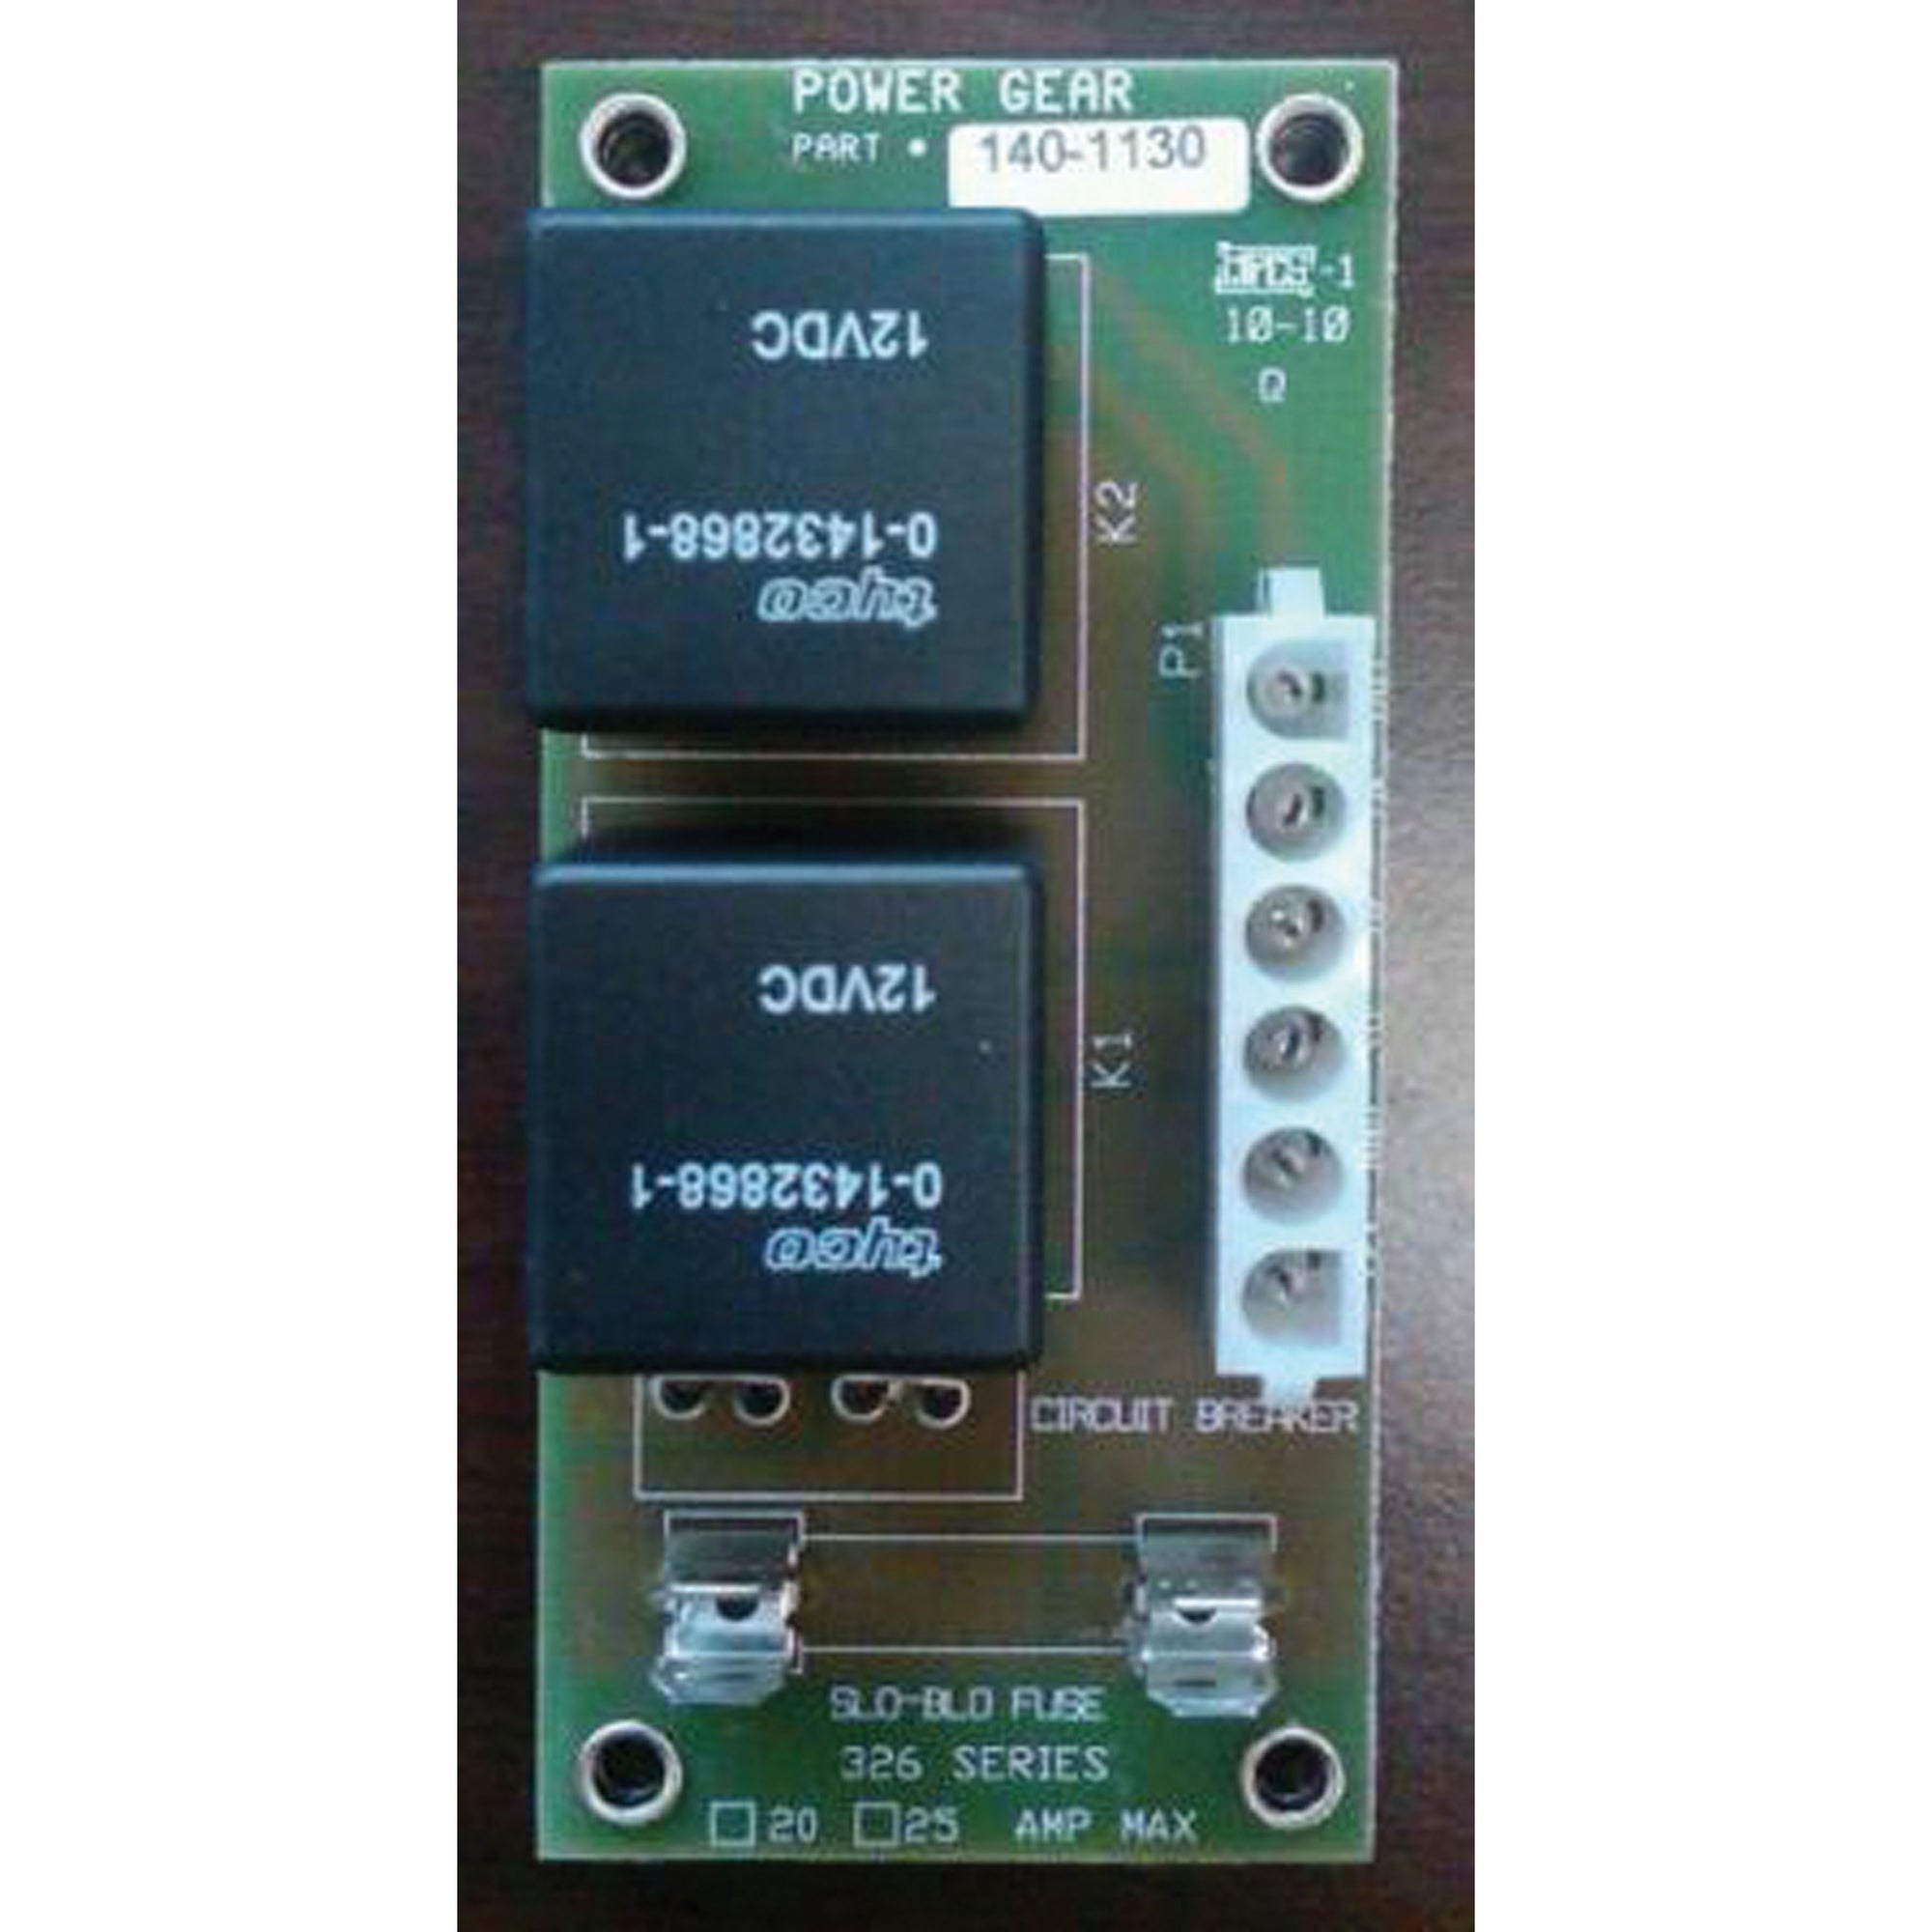 Lippert 383663 Kwikee Power Gear Circuit Board for Slide-Out